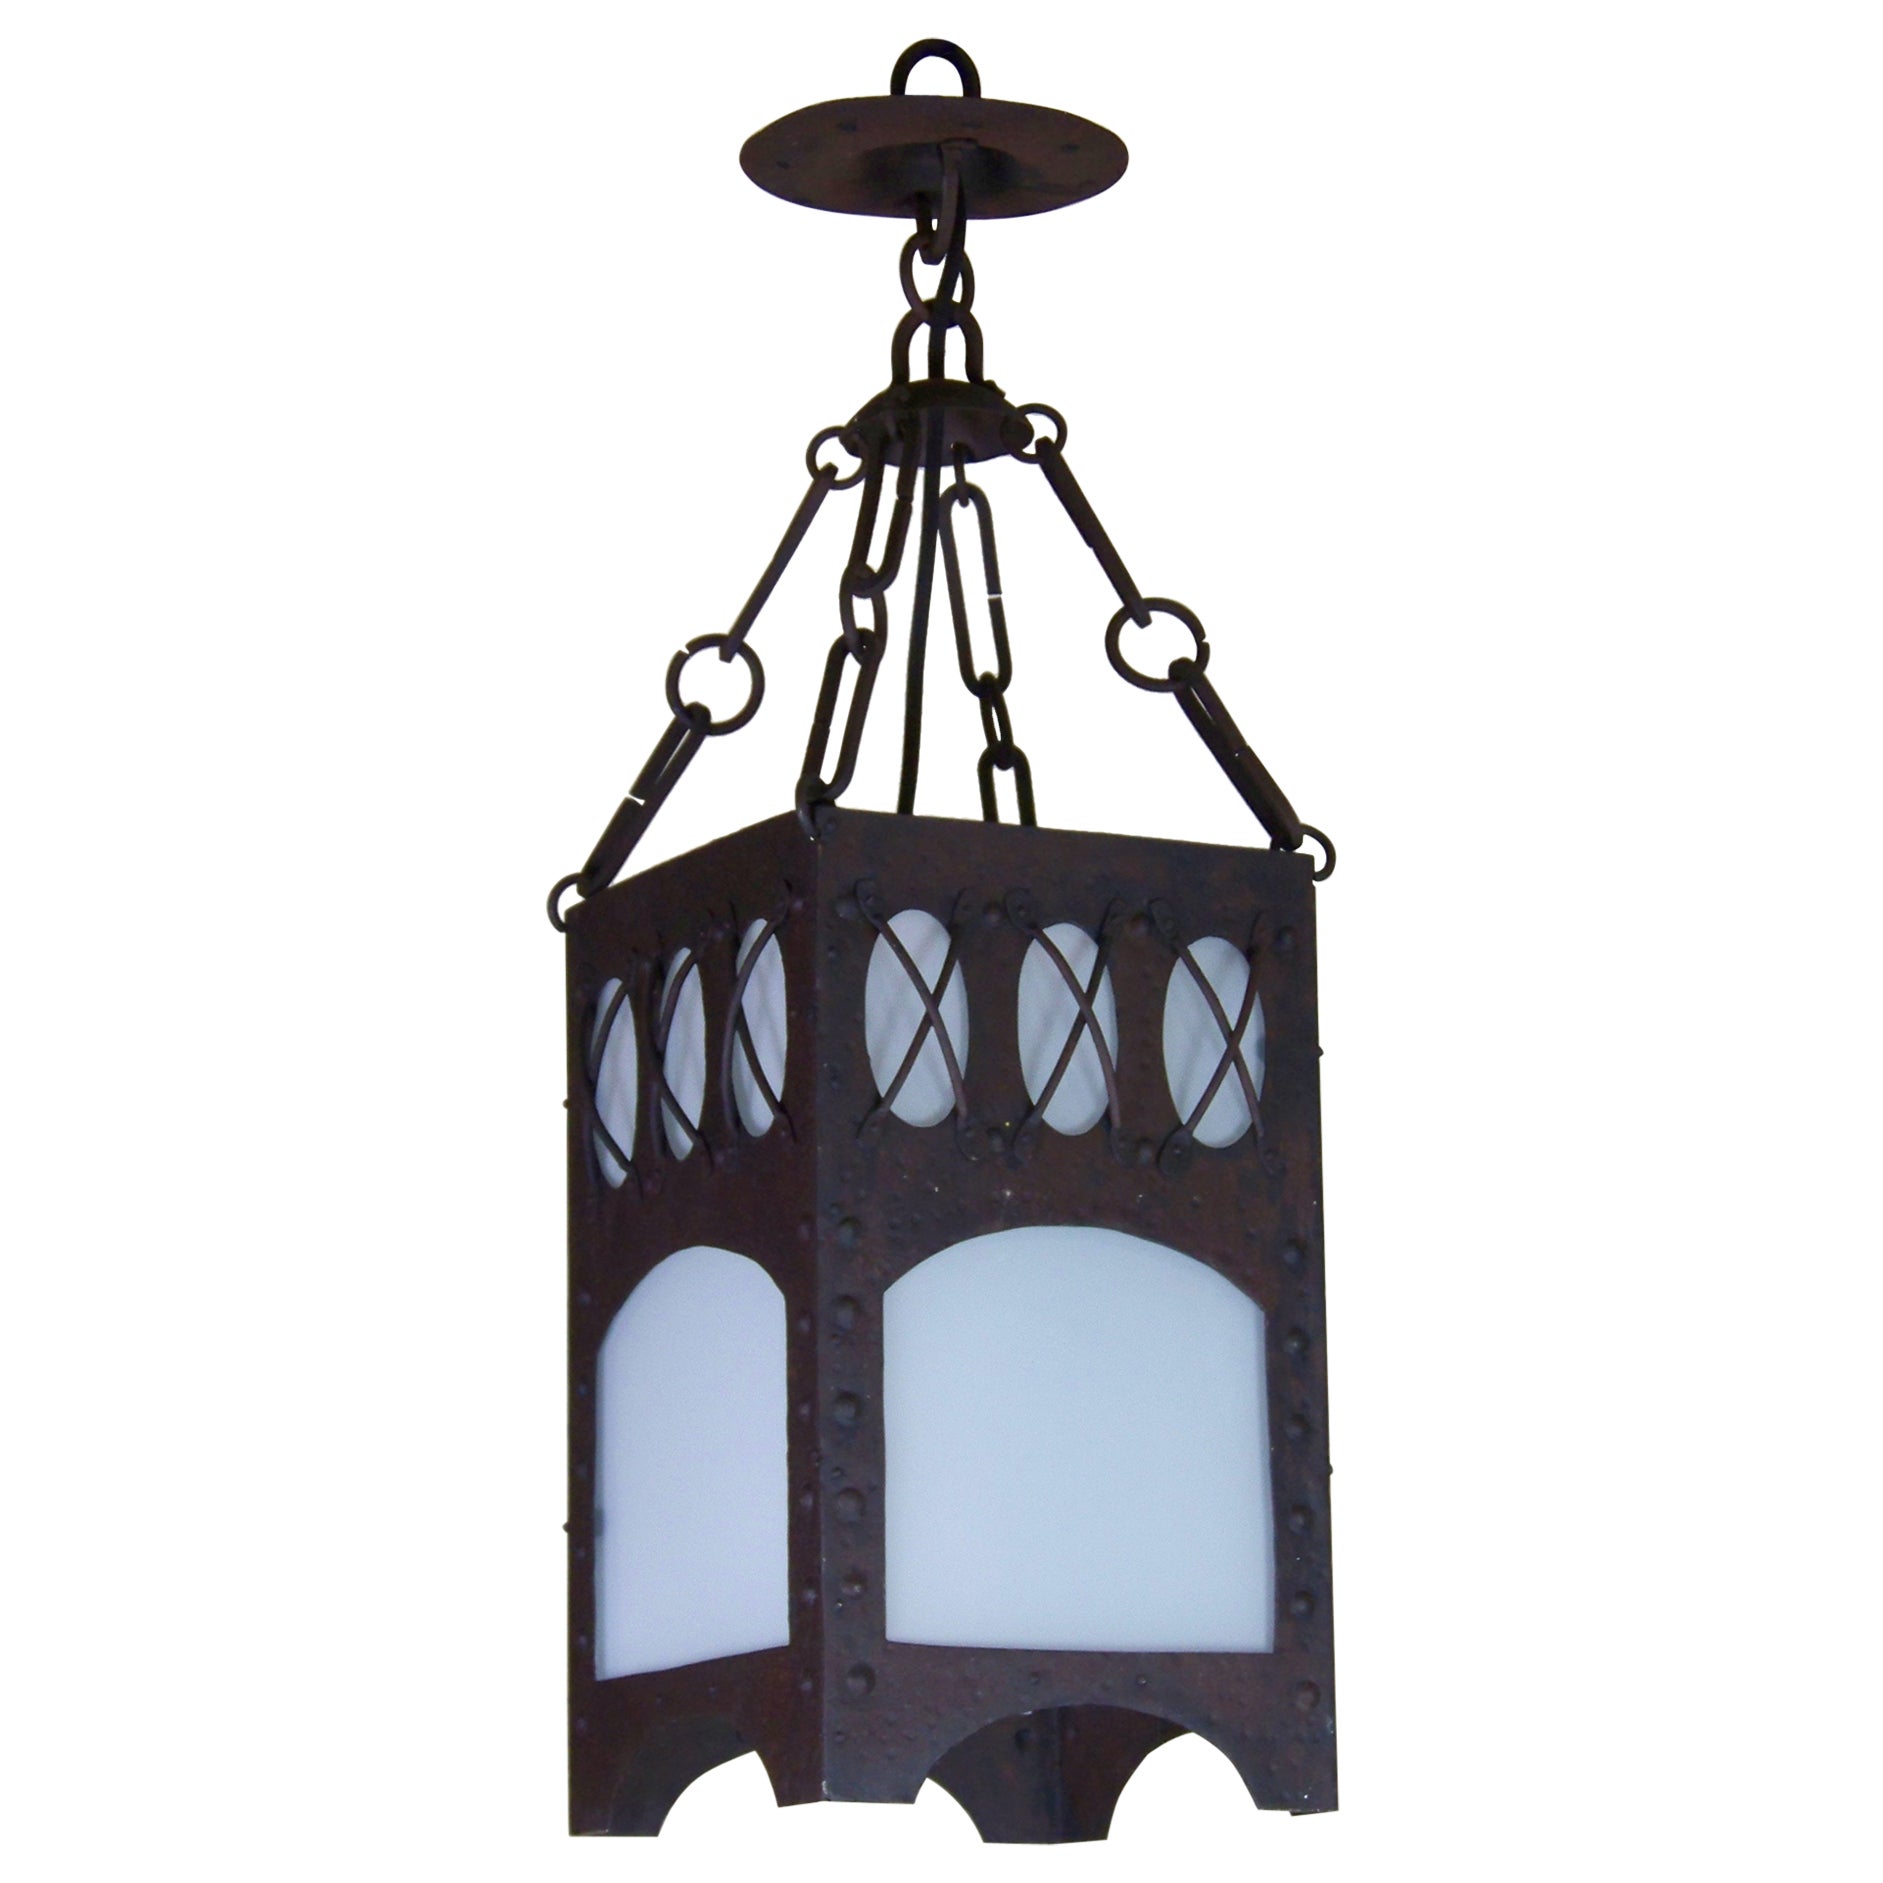 Art Nouveau lantern - forged iron